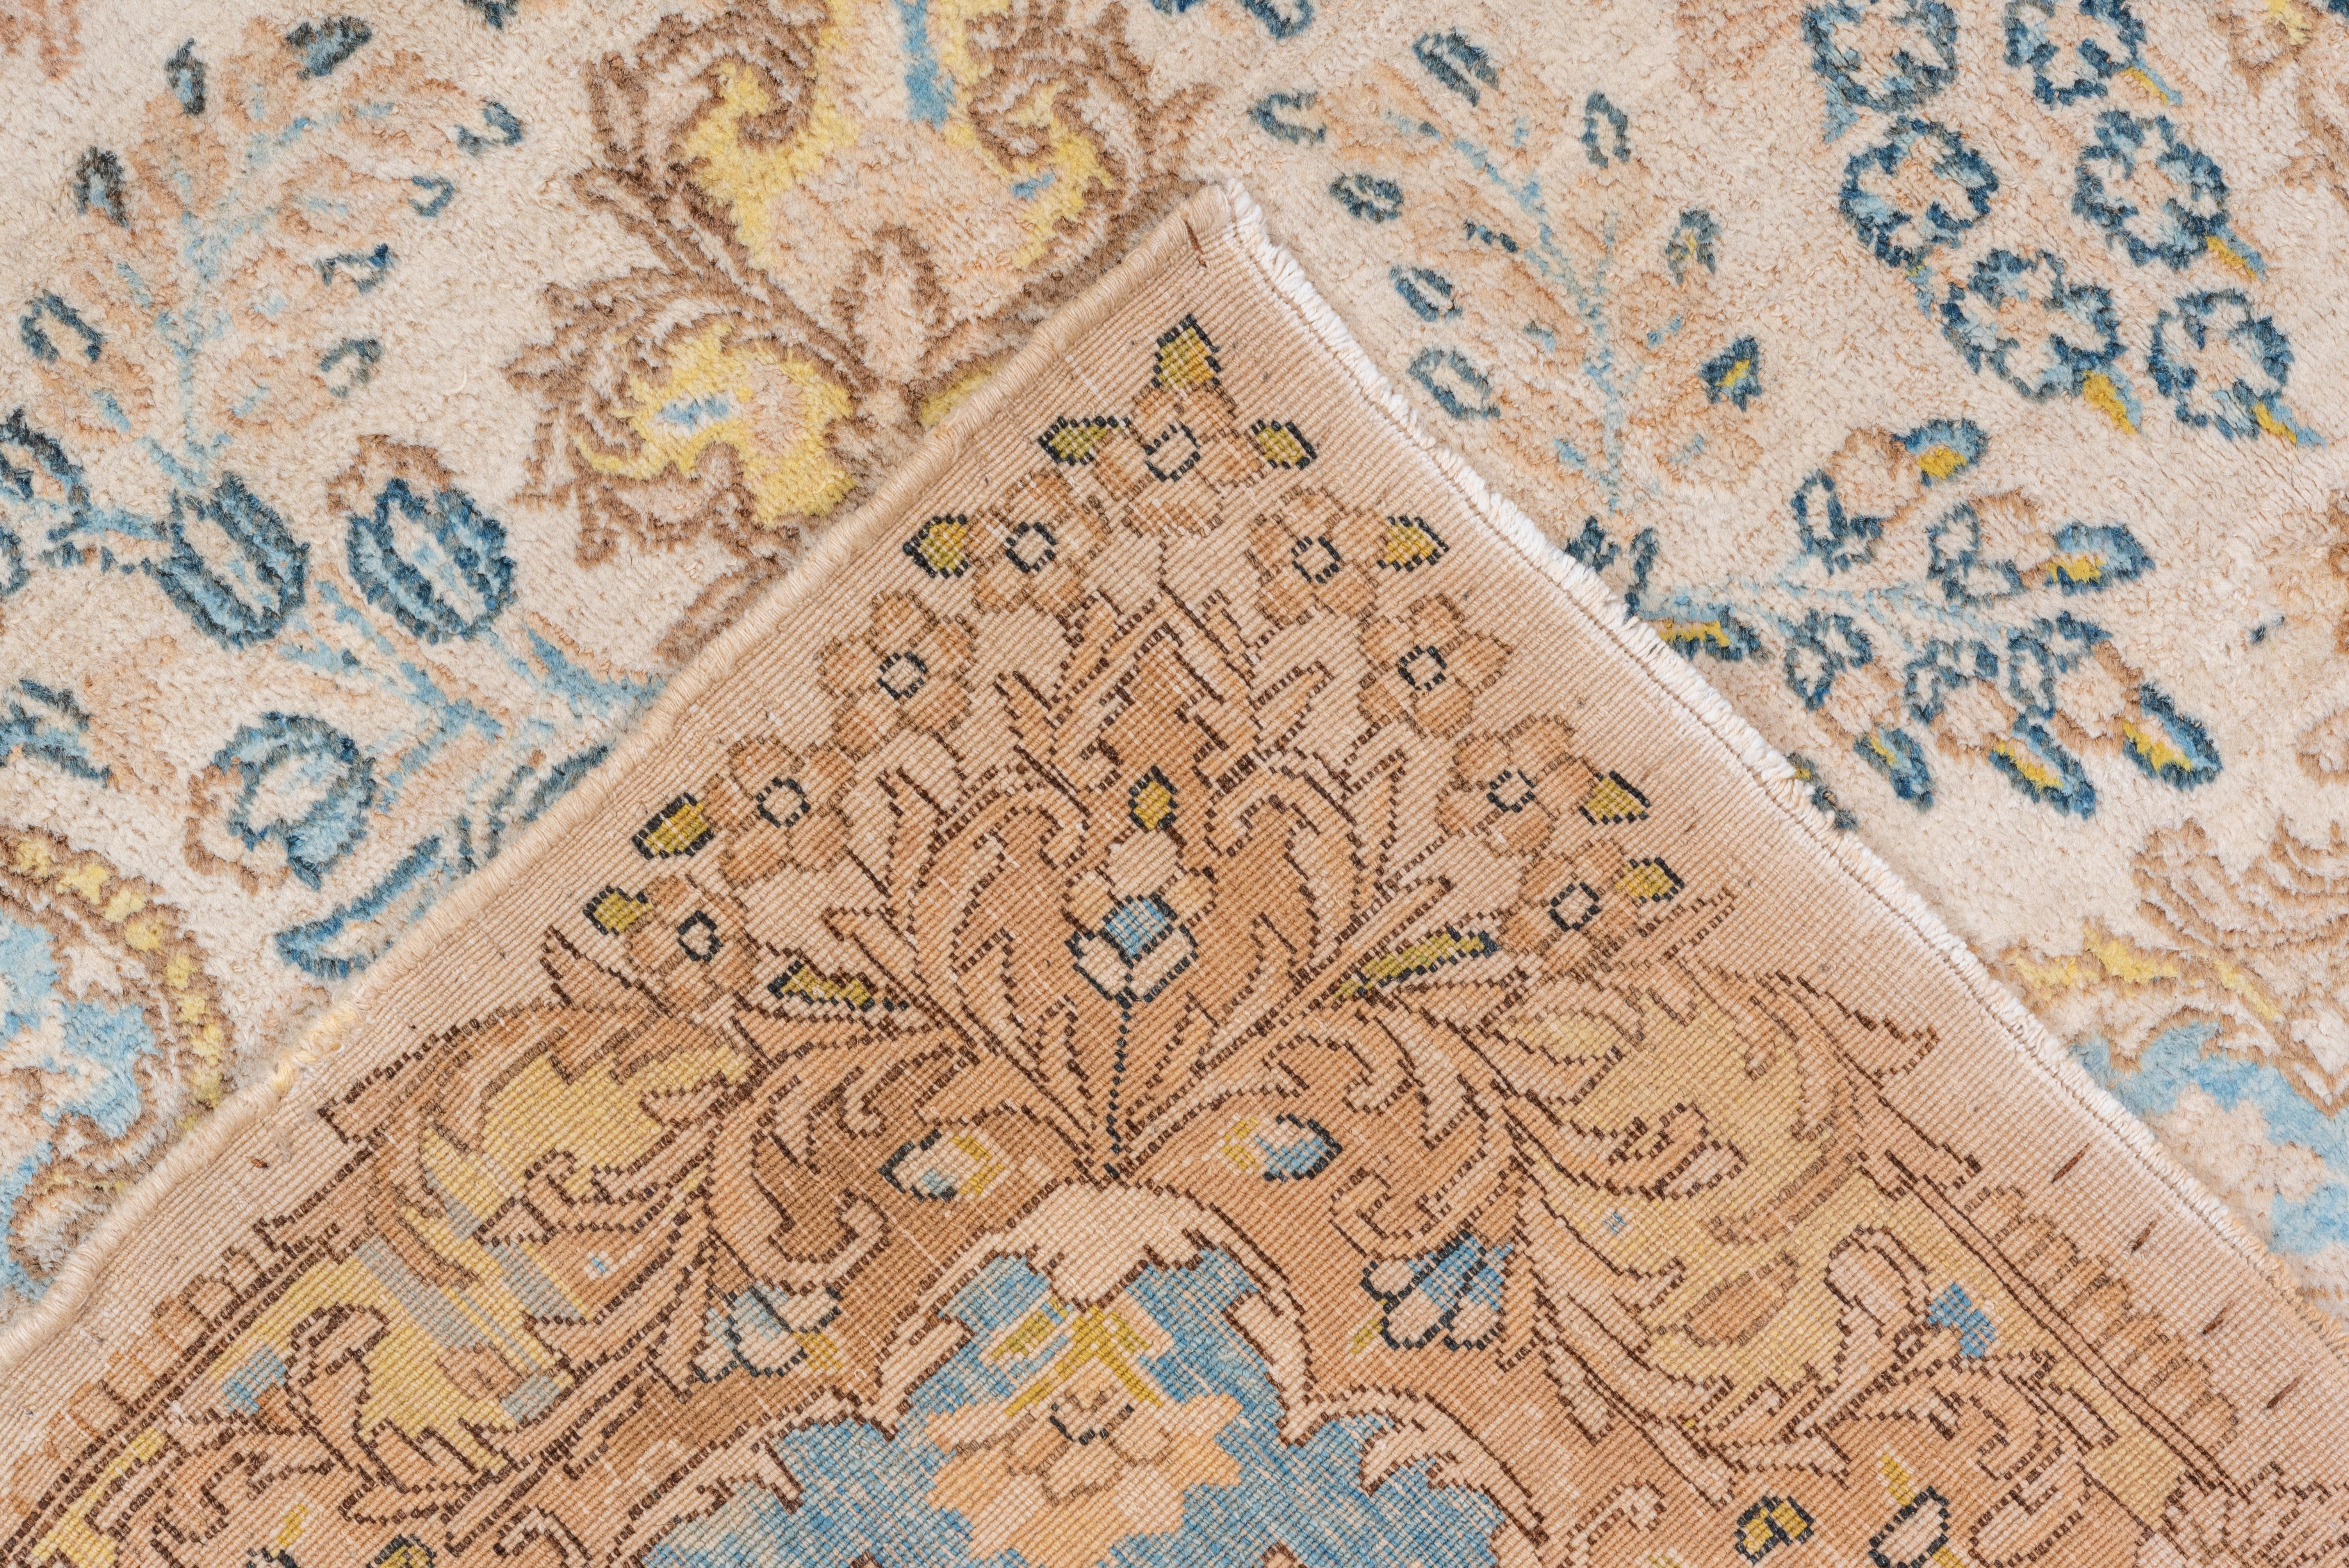 Antique Neutral Persian Kerman Carpet with Light Blue & Yellows Tones 1